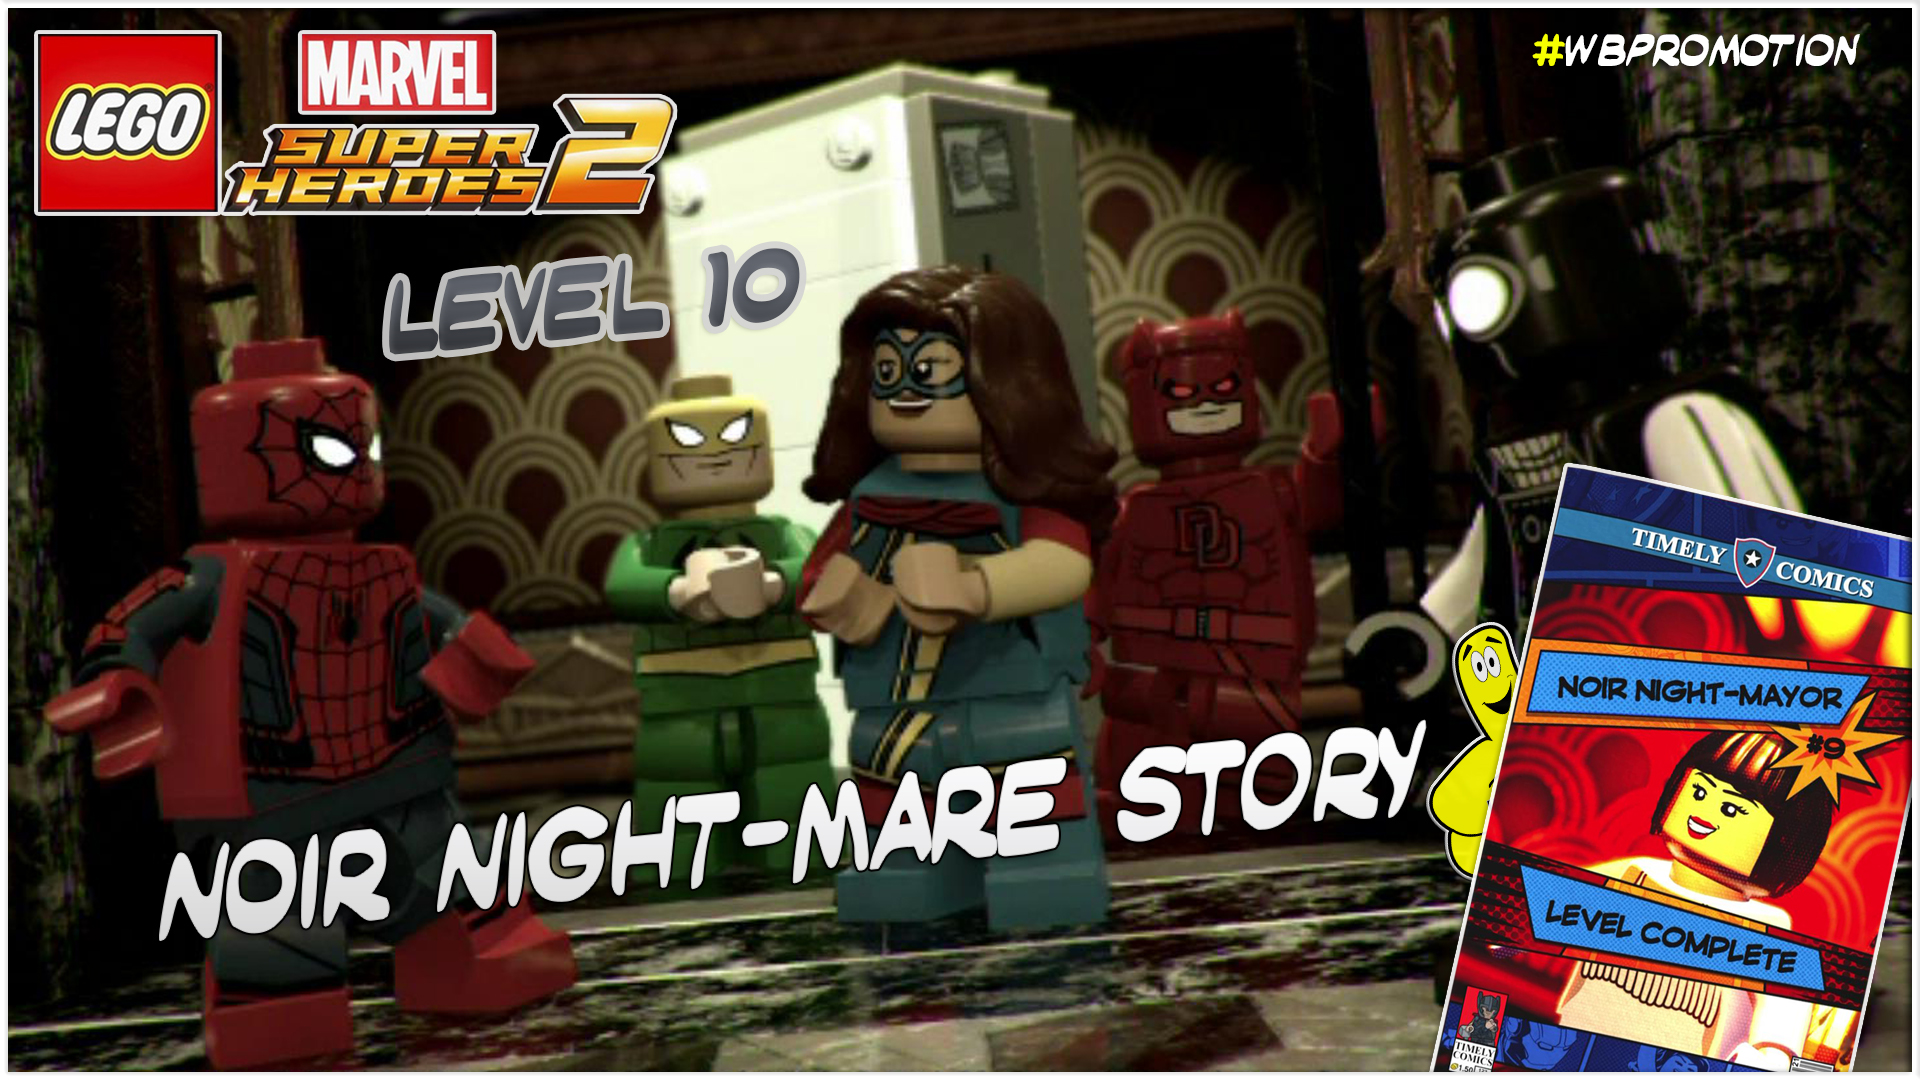 Lego Marvel Superheroes 2: Level 10 / Noir Night-Mayor STORY – HTG